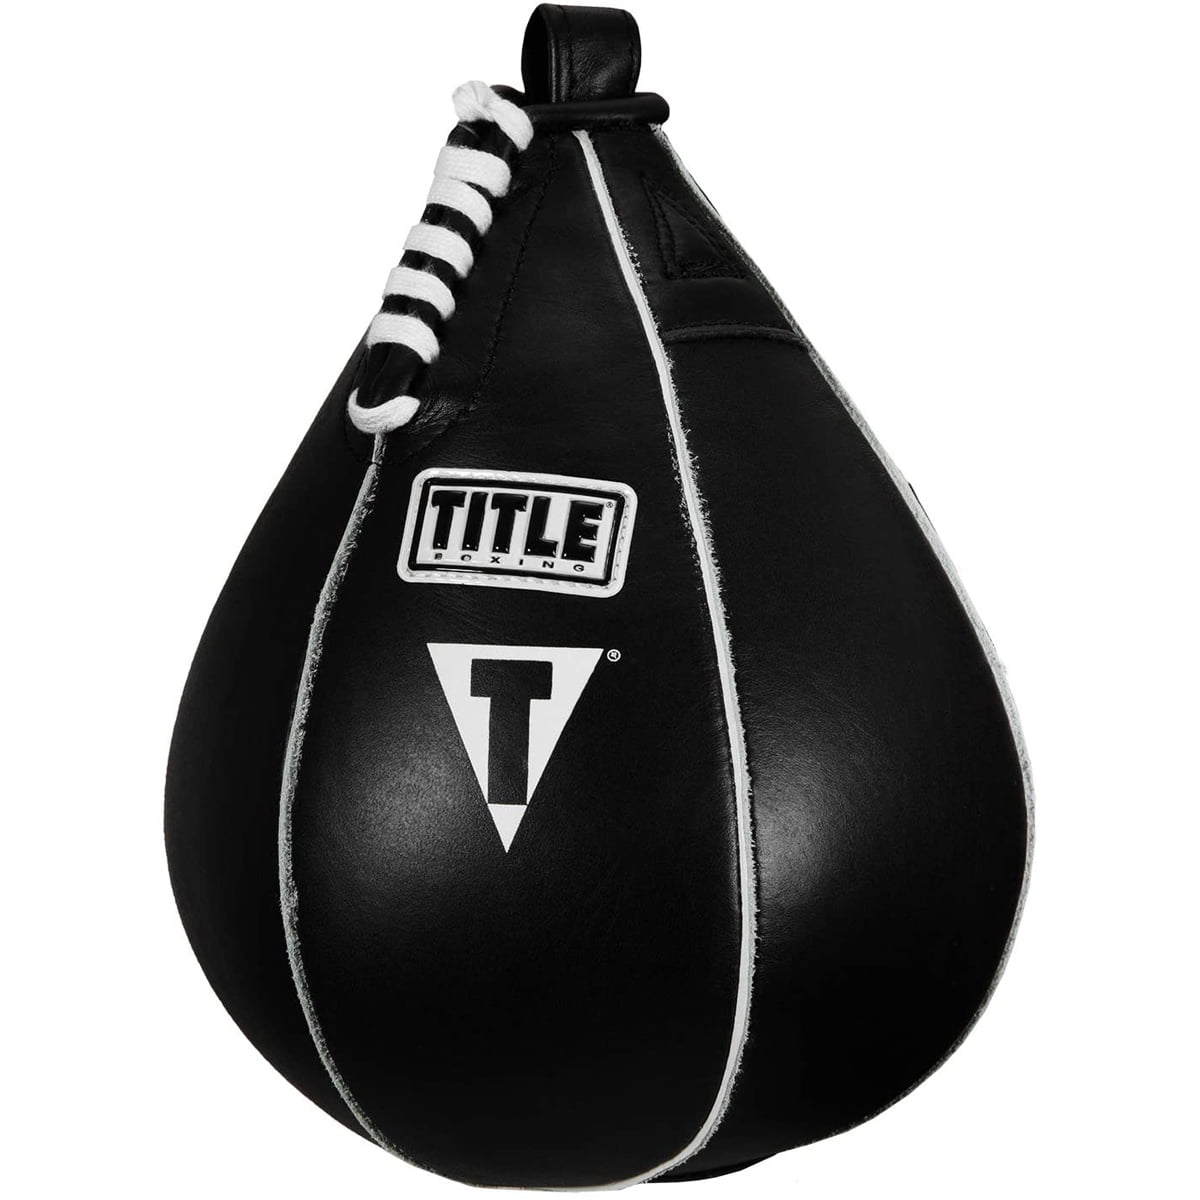 TITLE Rapid-Reflex Boxing Bar Tri Bag - TITLE Boxing - Best Freestanding Reflex  Bag Workout 